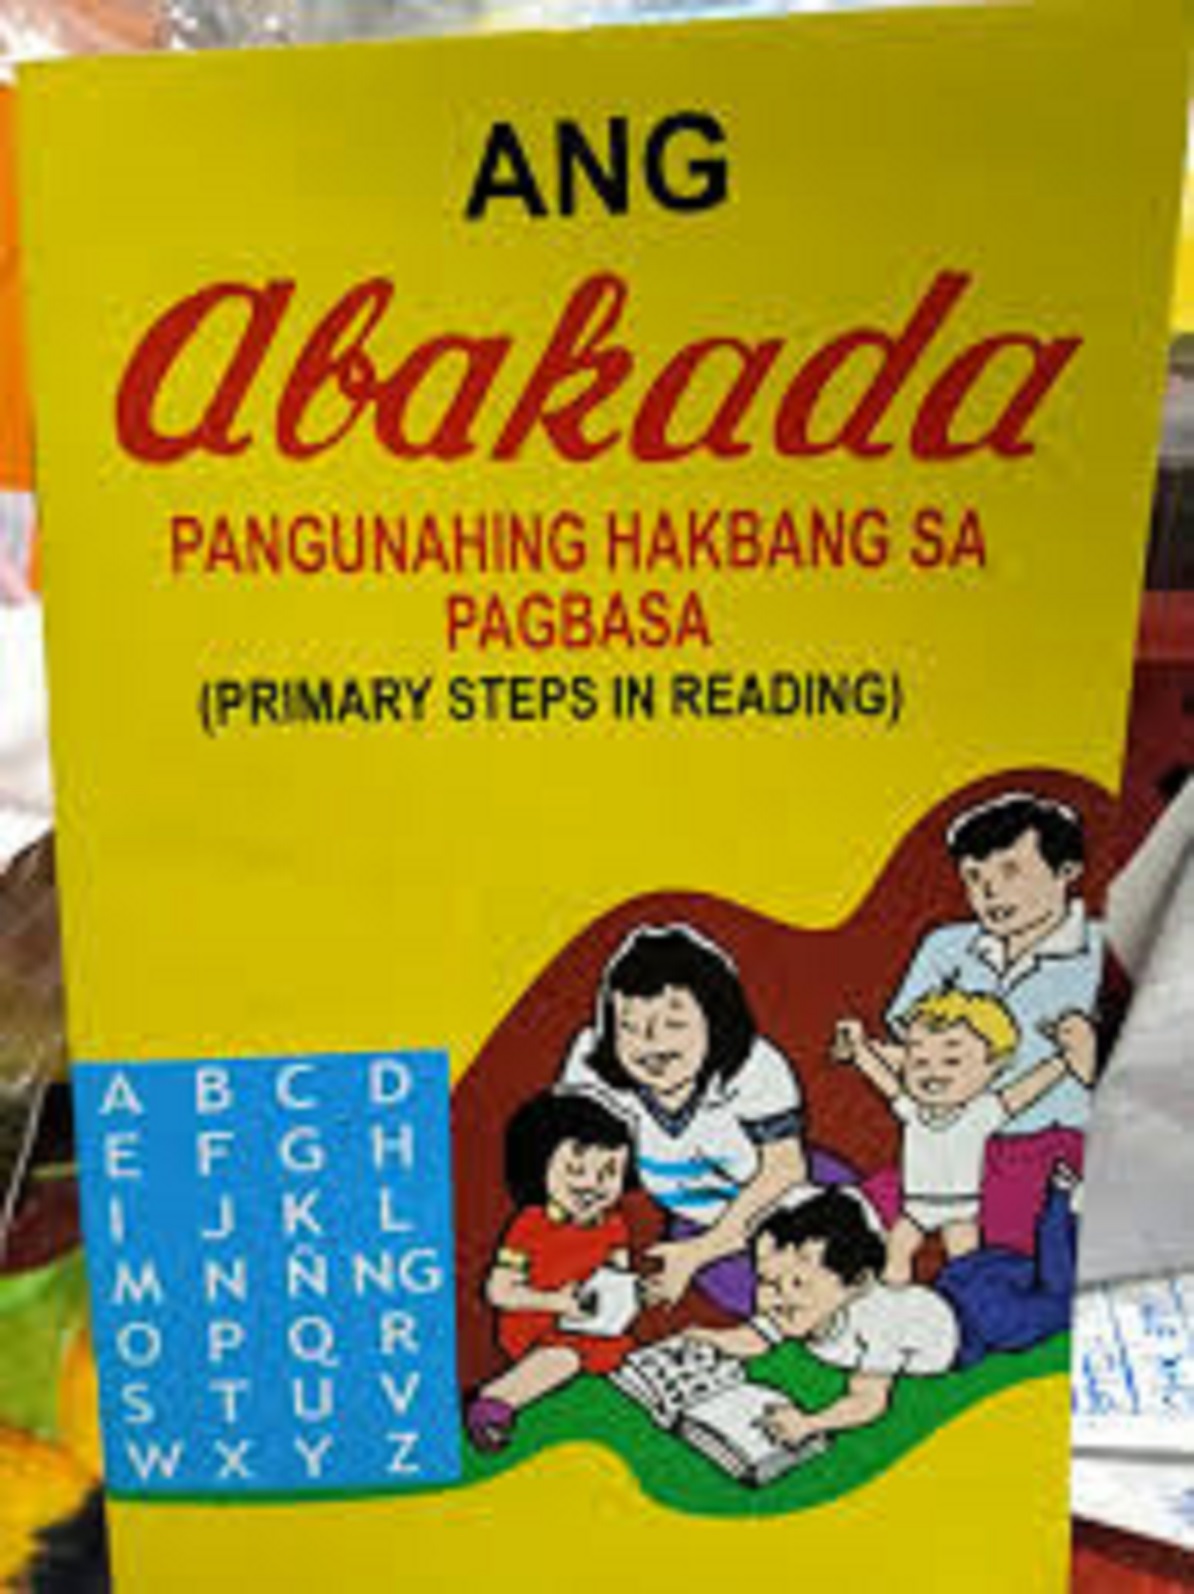 abakada tagalog